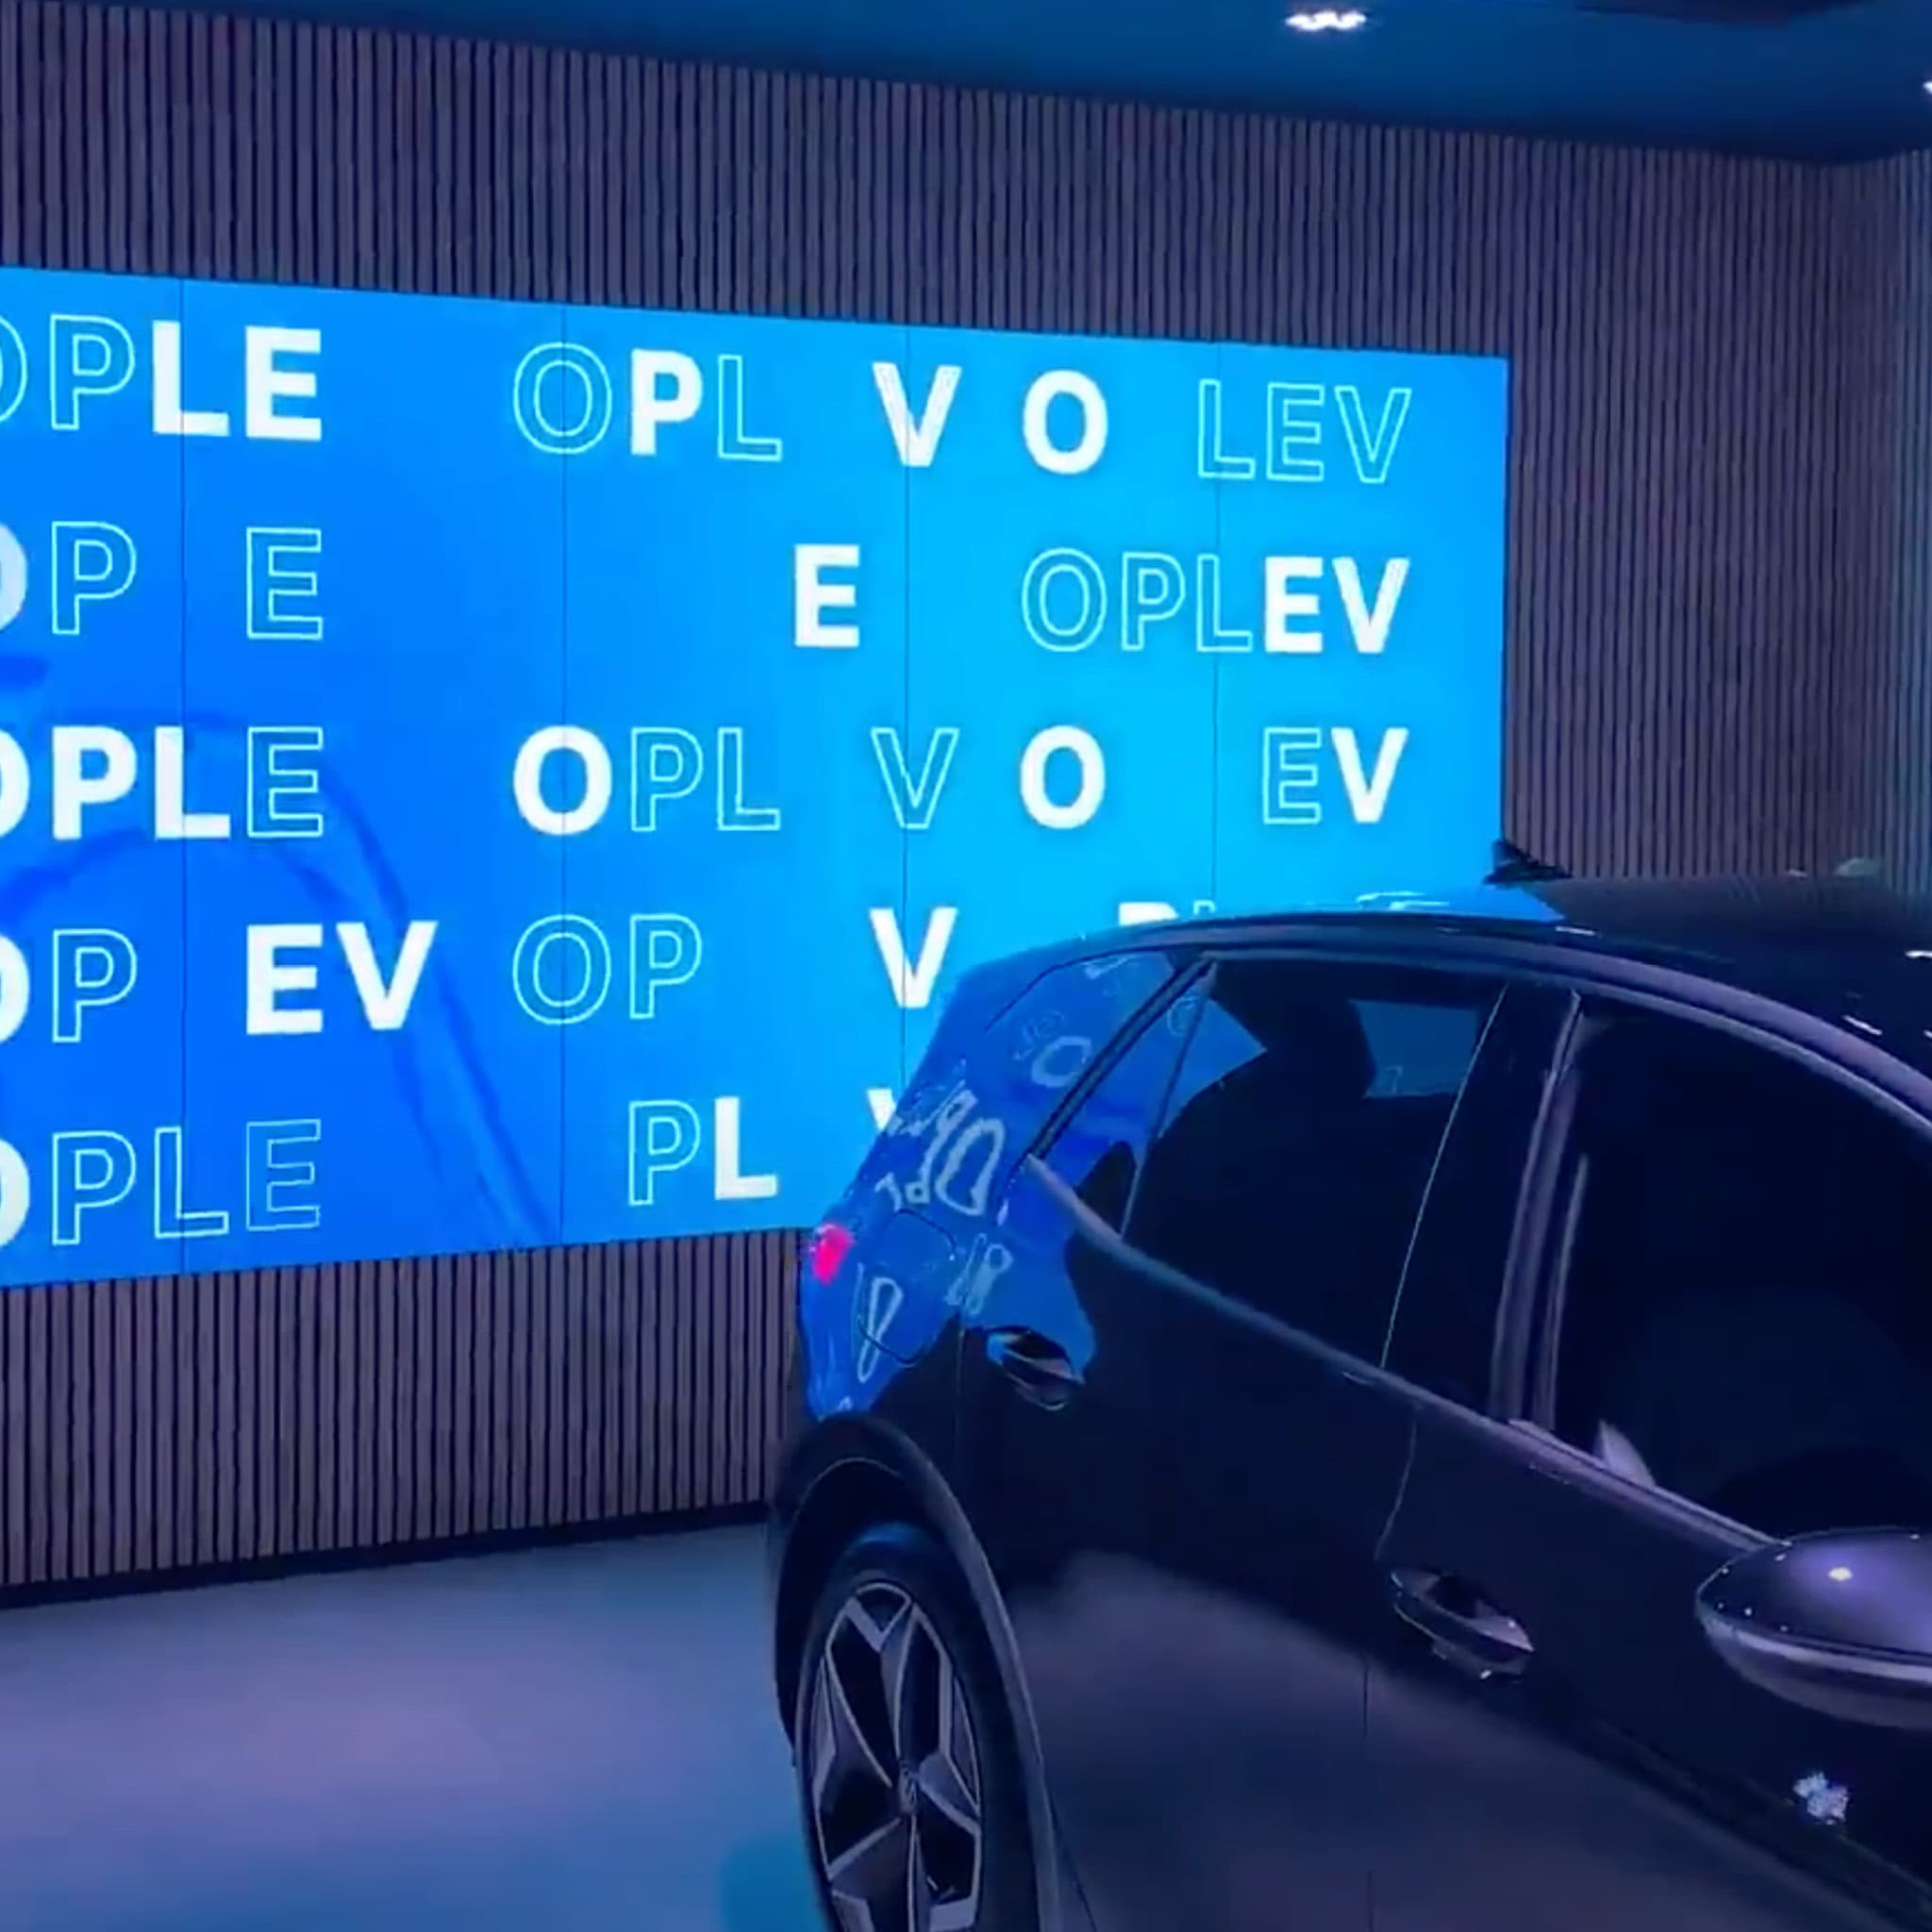 Showrooms af Volkswagen City Studio, blå Volkswagen baggrund med en bil foran